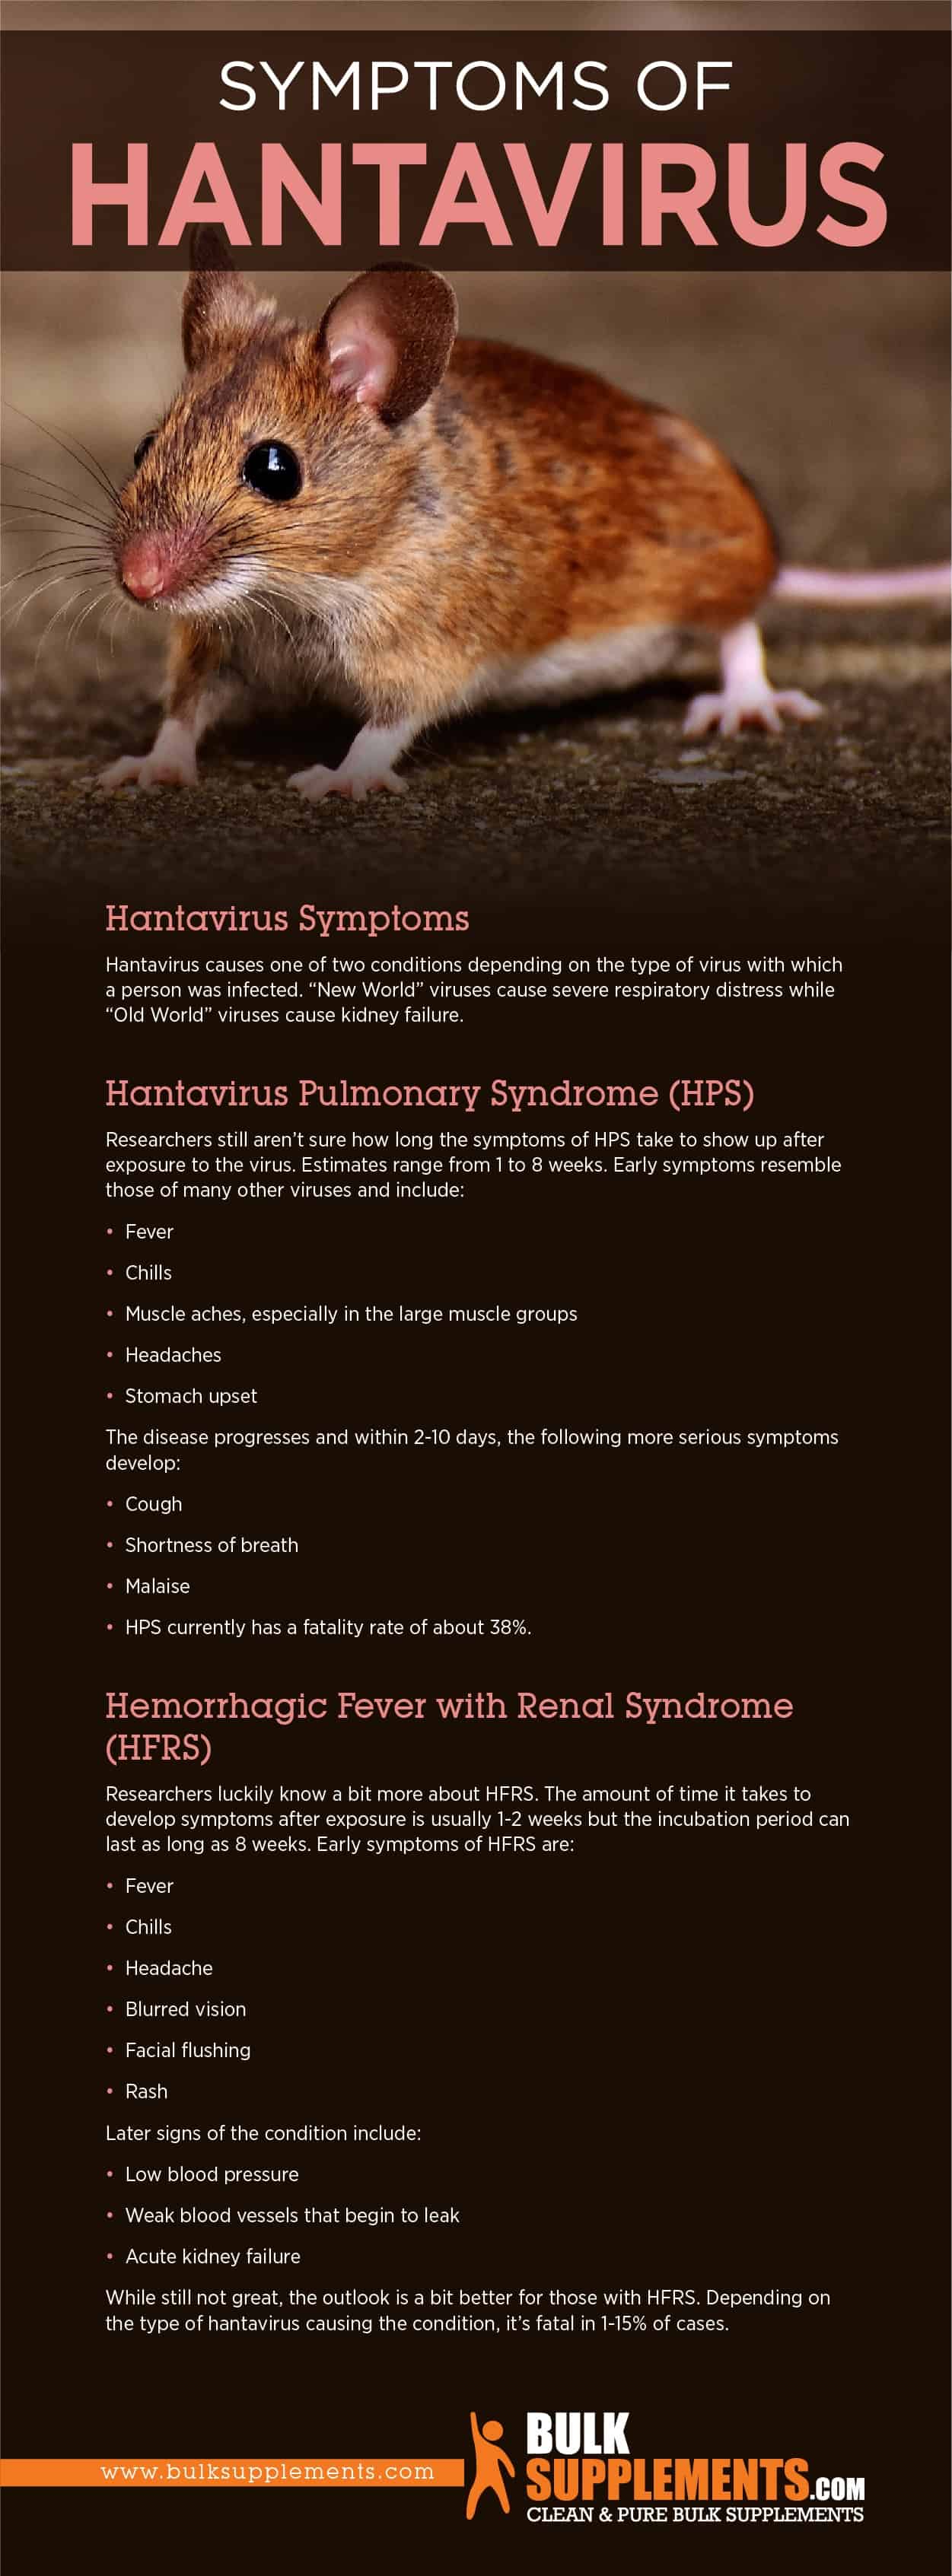 Symptoms of Hantavirus